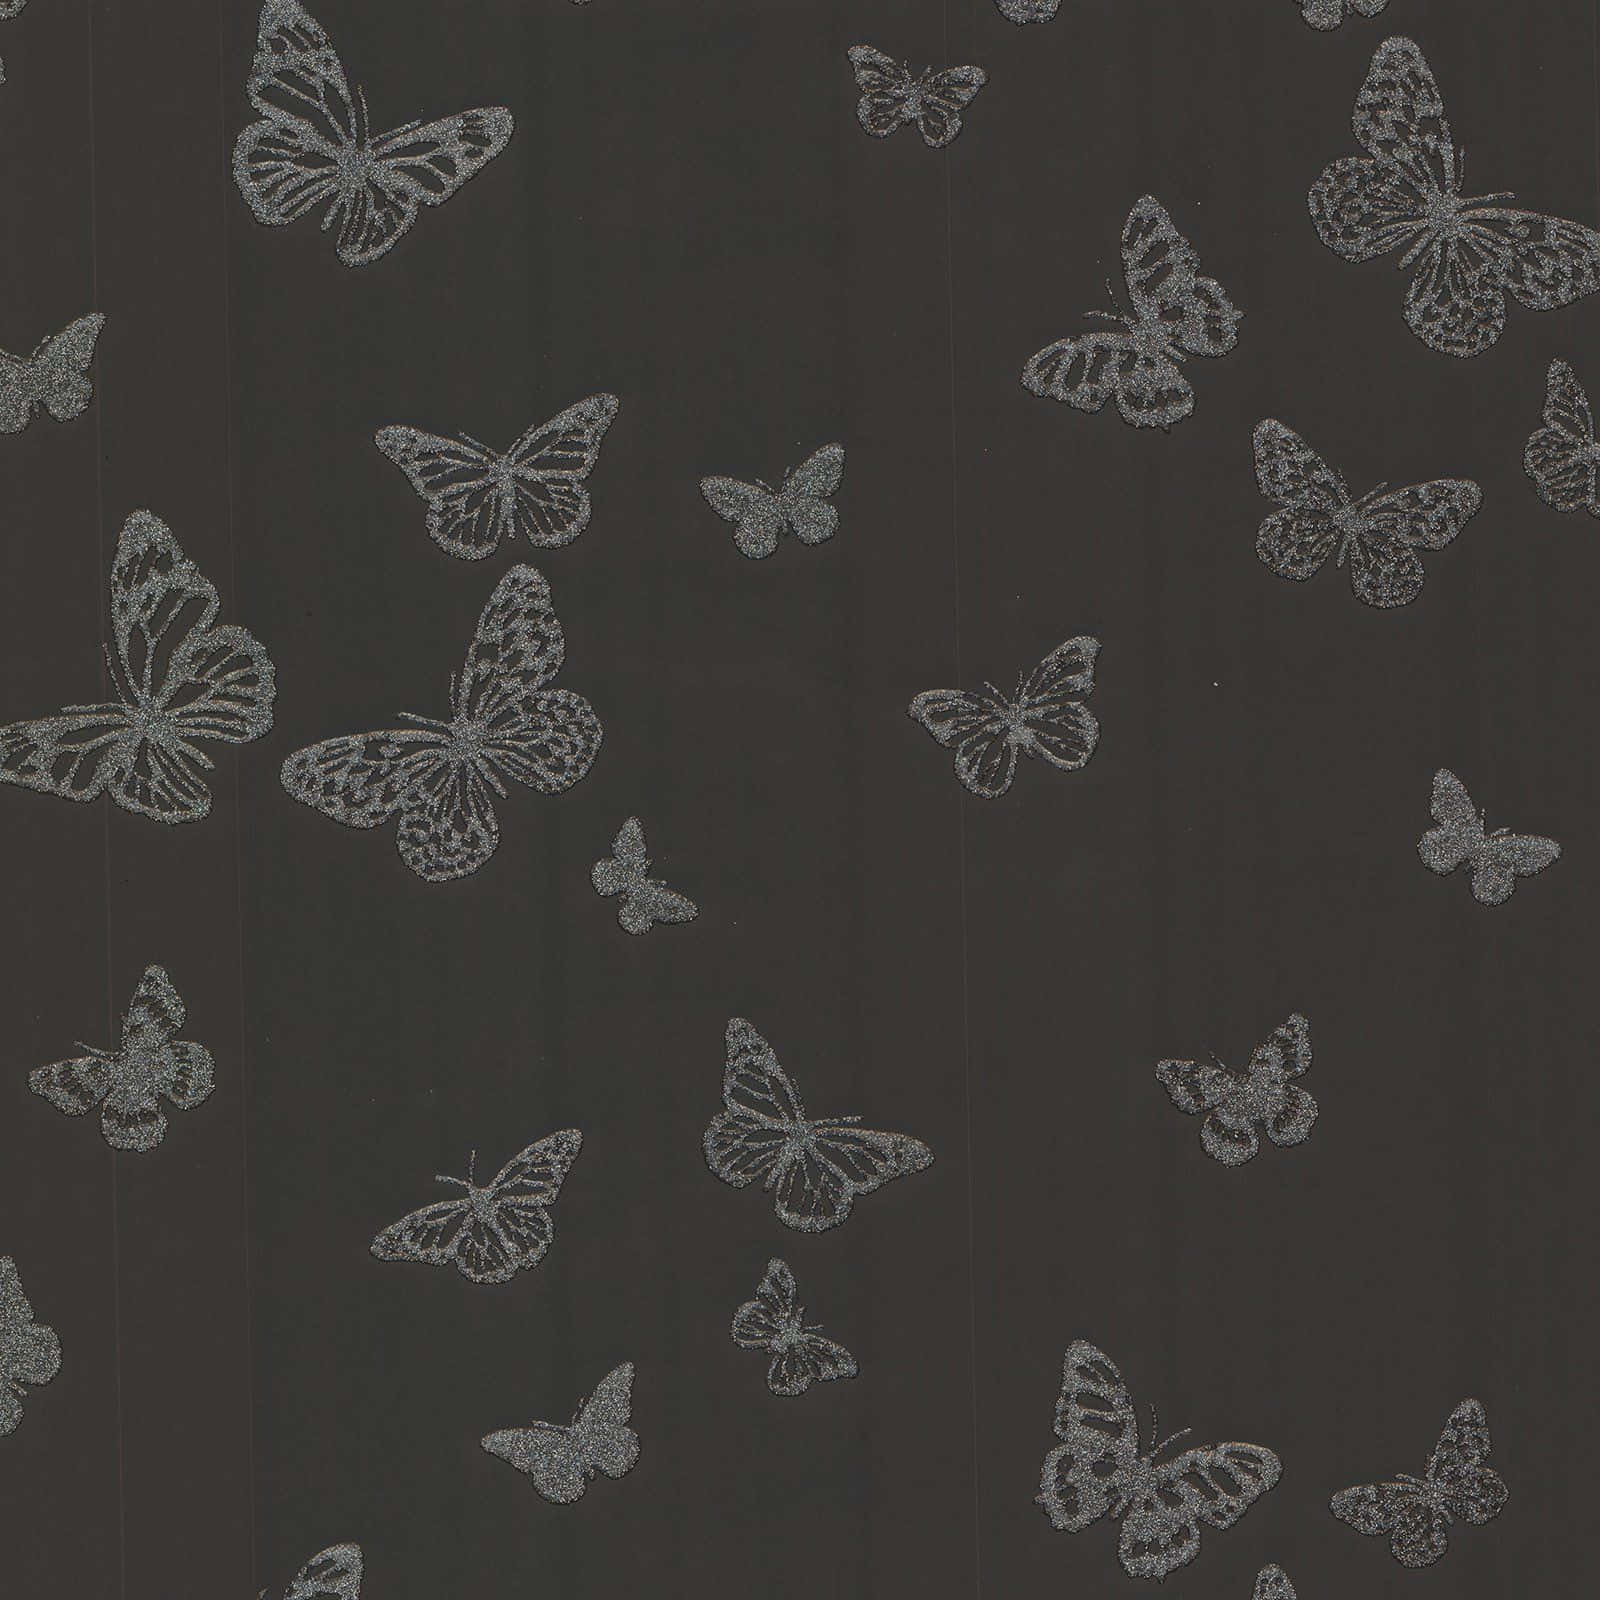 A Black Wallpaper With Butterflies On It